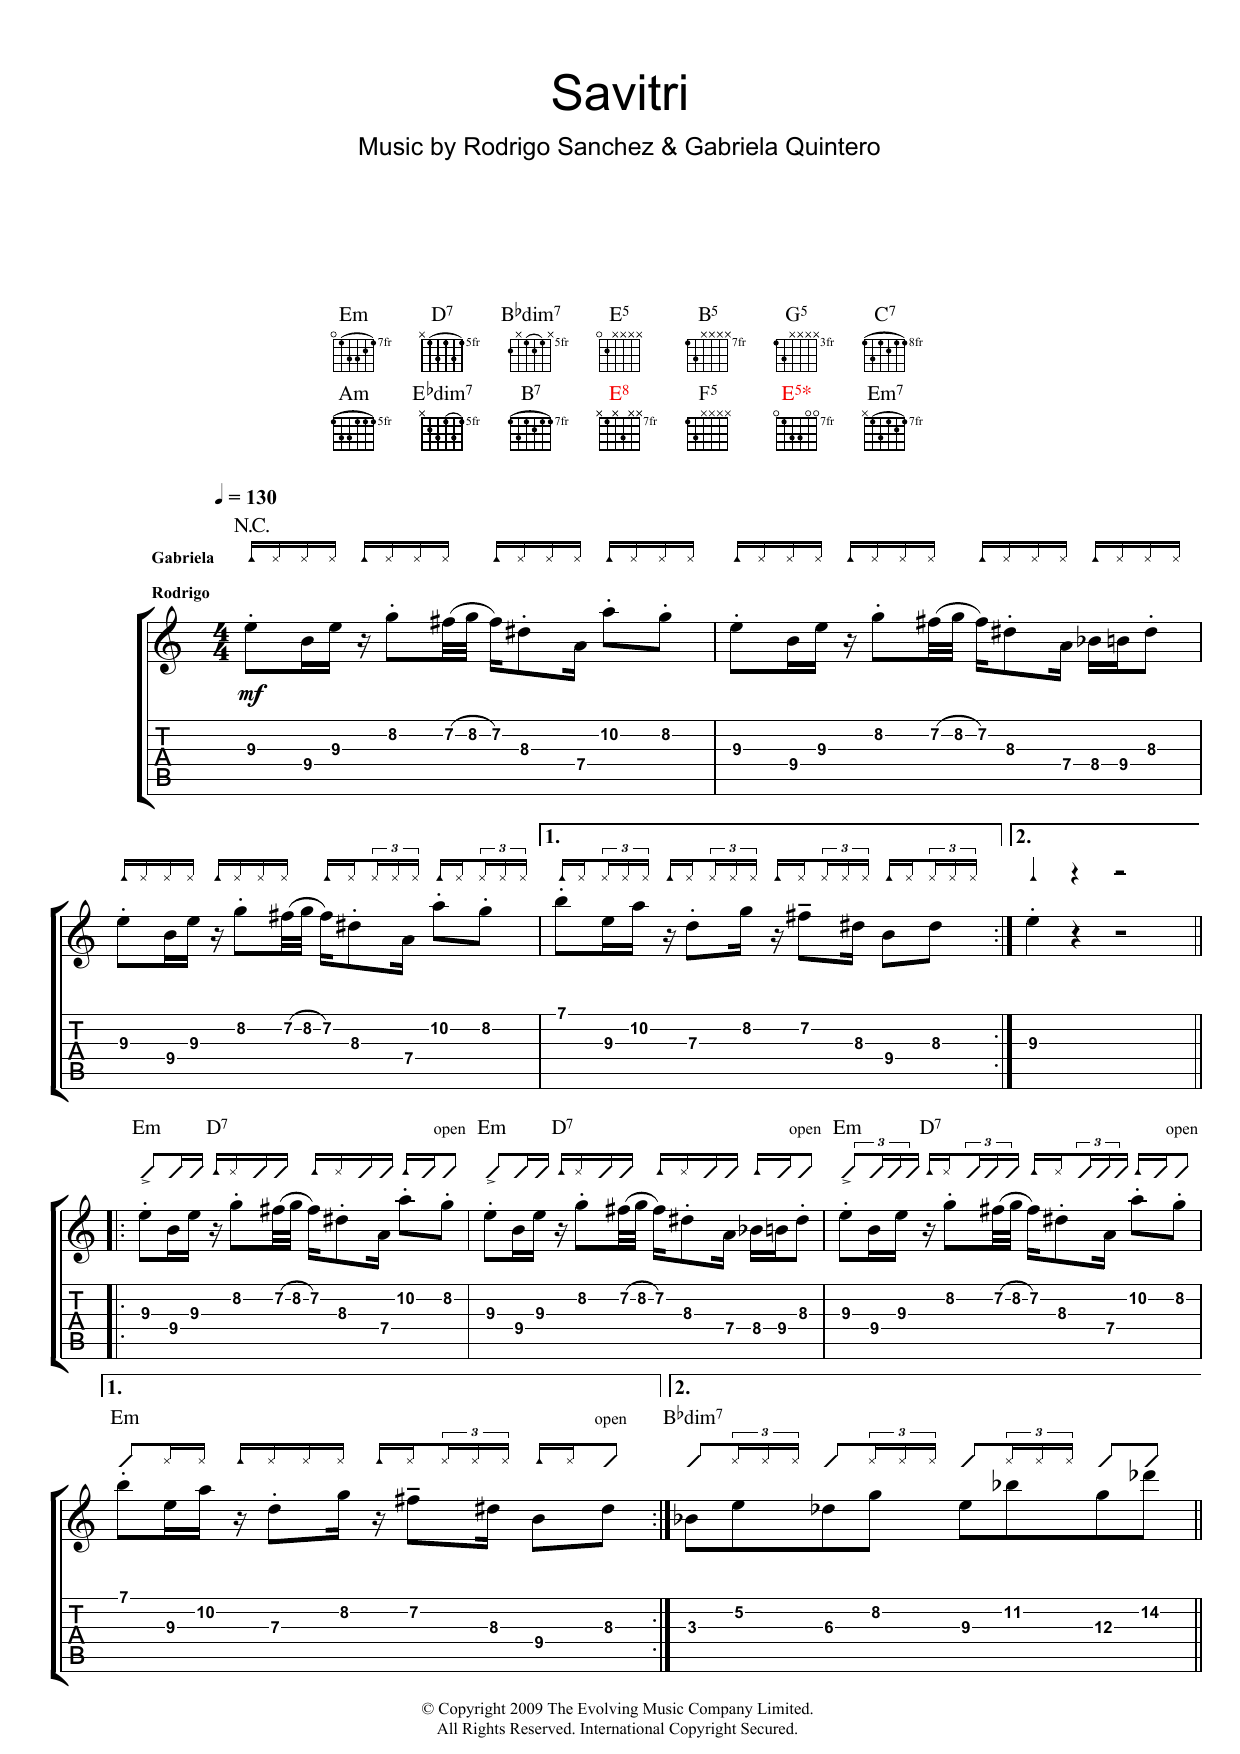 Rodrigo y Gabriela Savitri Sheet Music Notes & Chords for Guitar Tab - Download or Print PDF